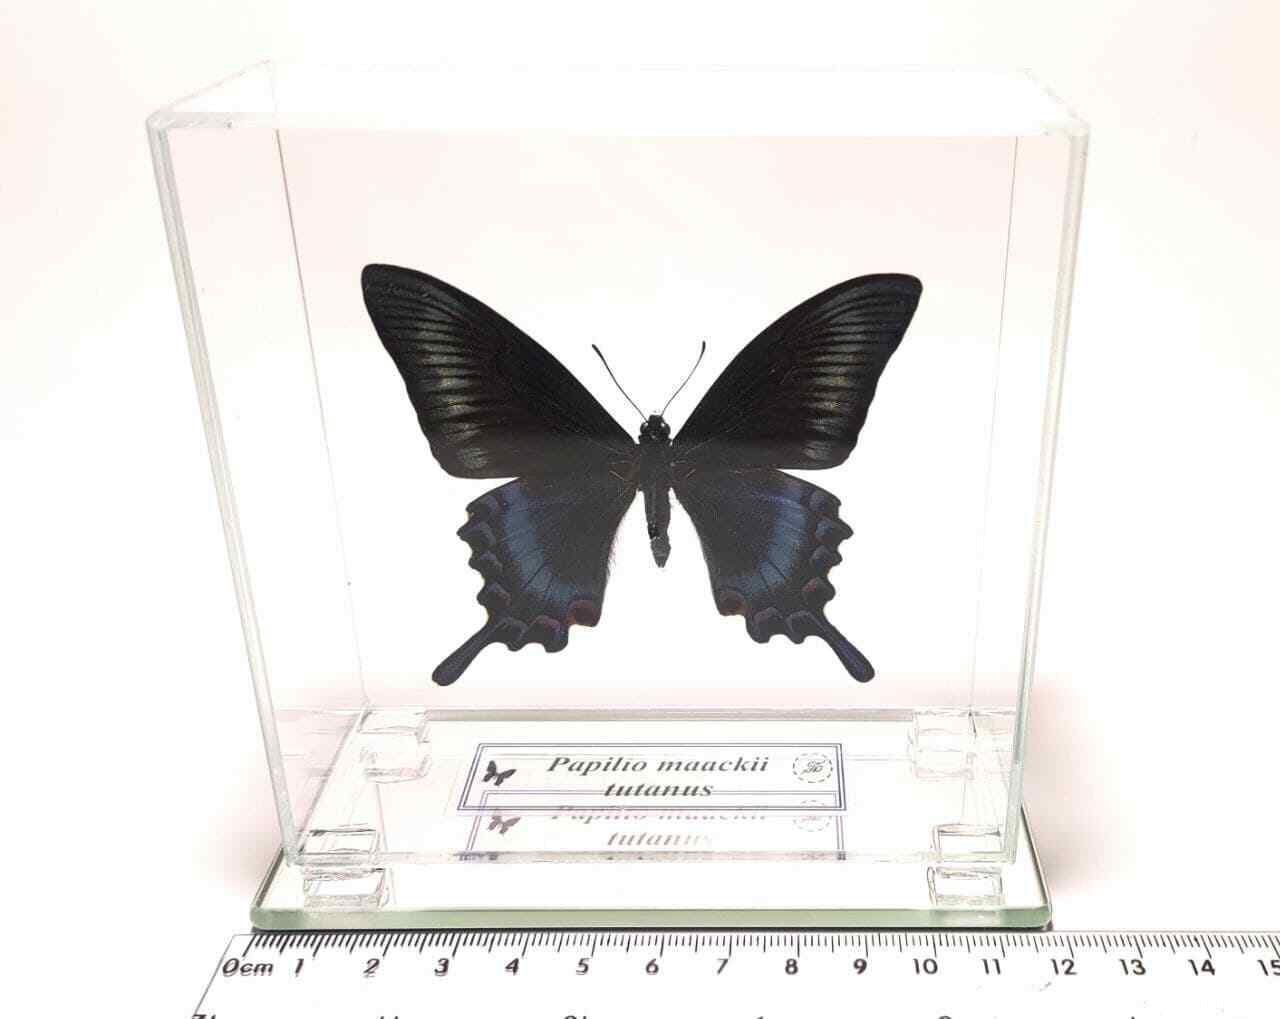 Papilionidae Papilio maackii tutanus in a glass cube, ENTOMOLOGY, taxidermy